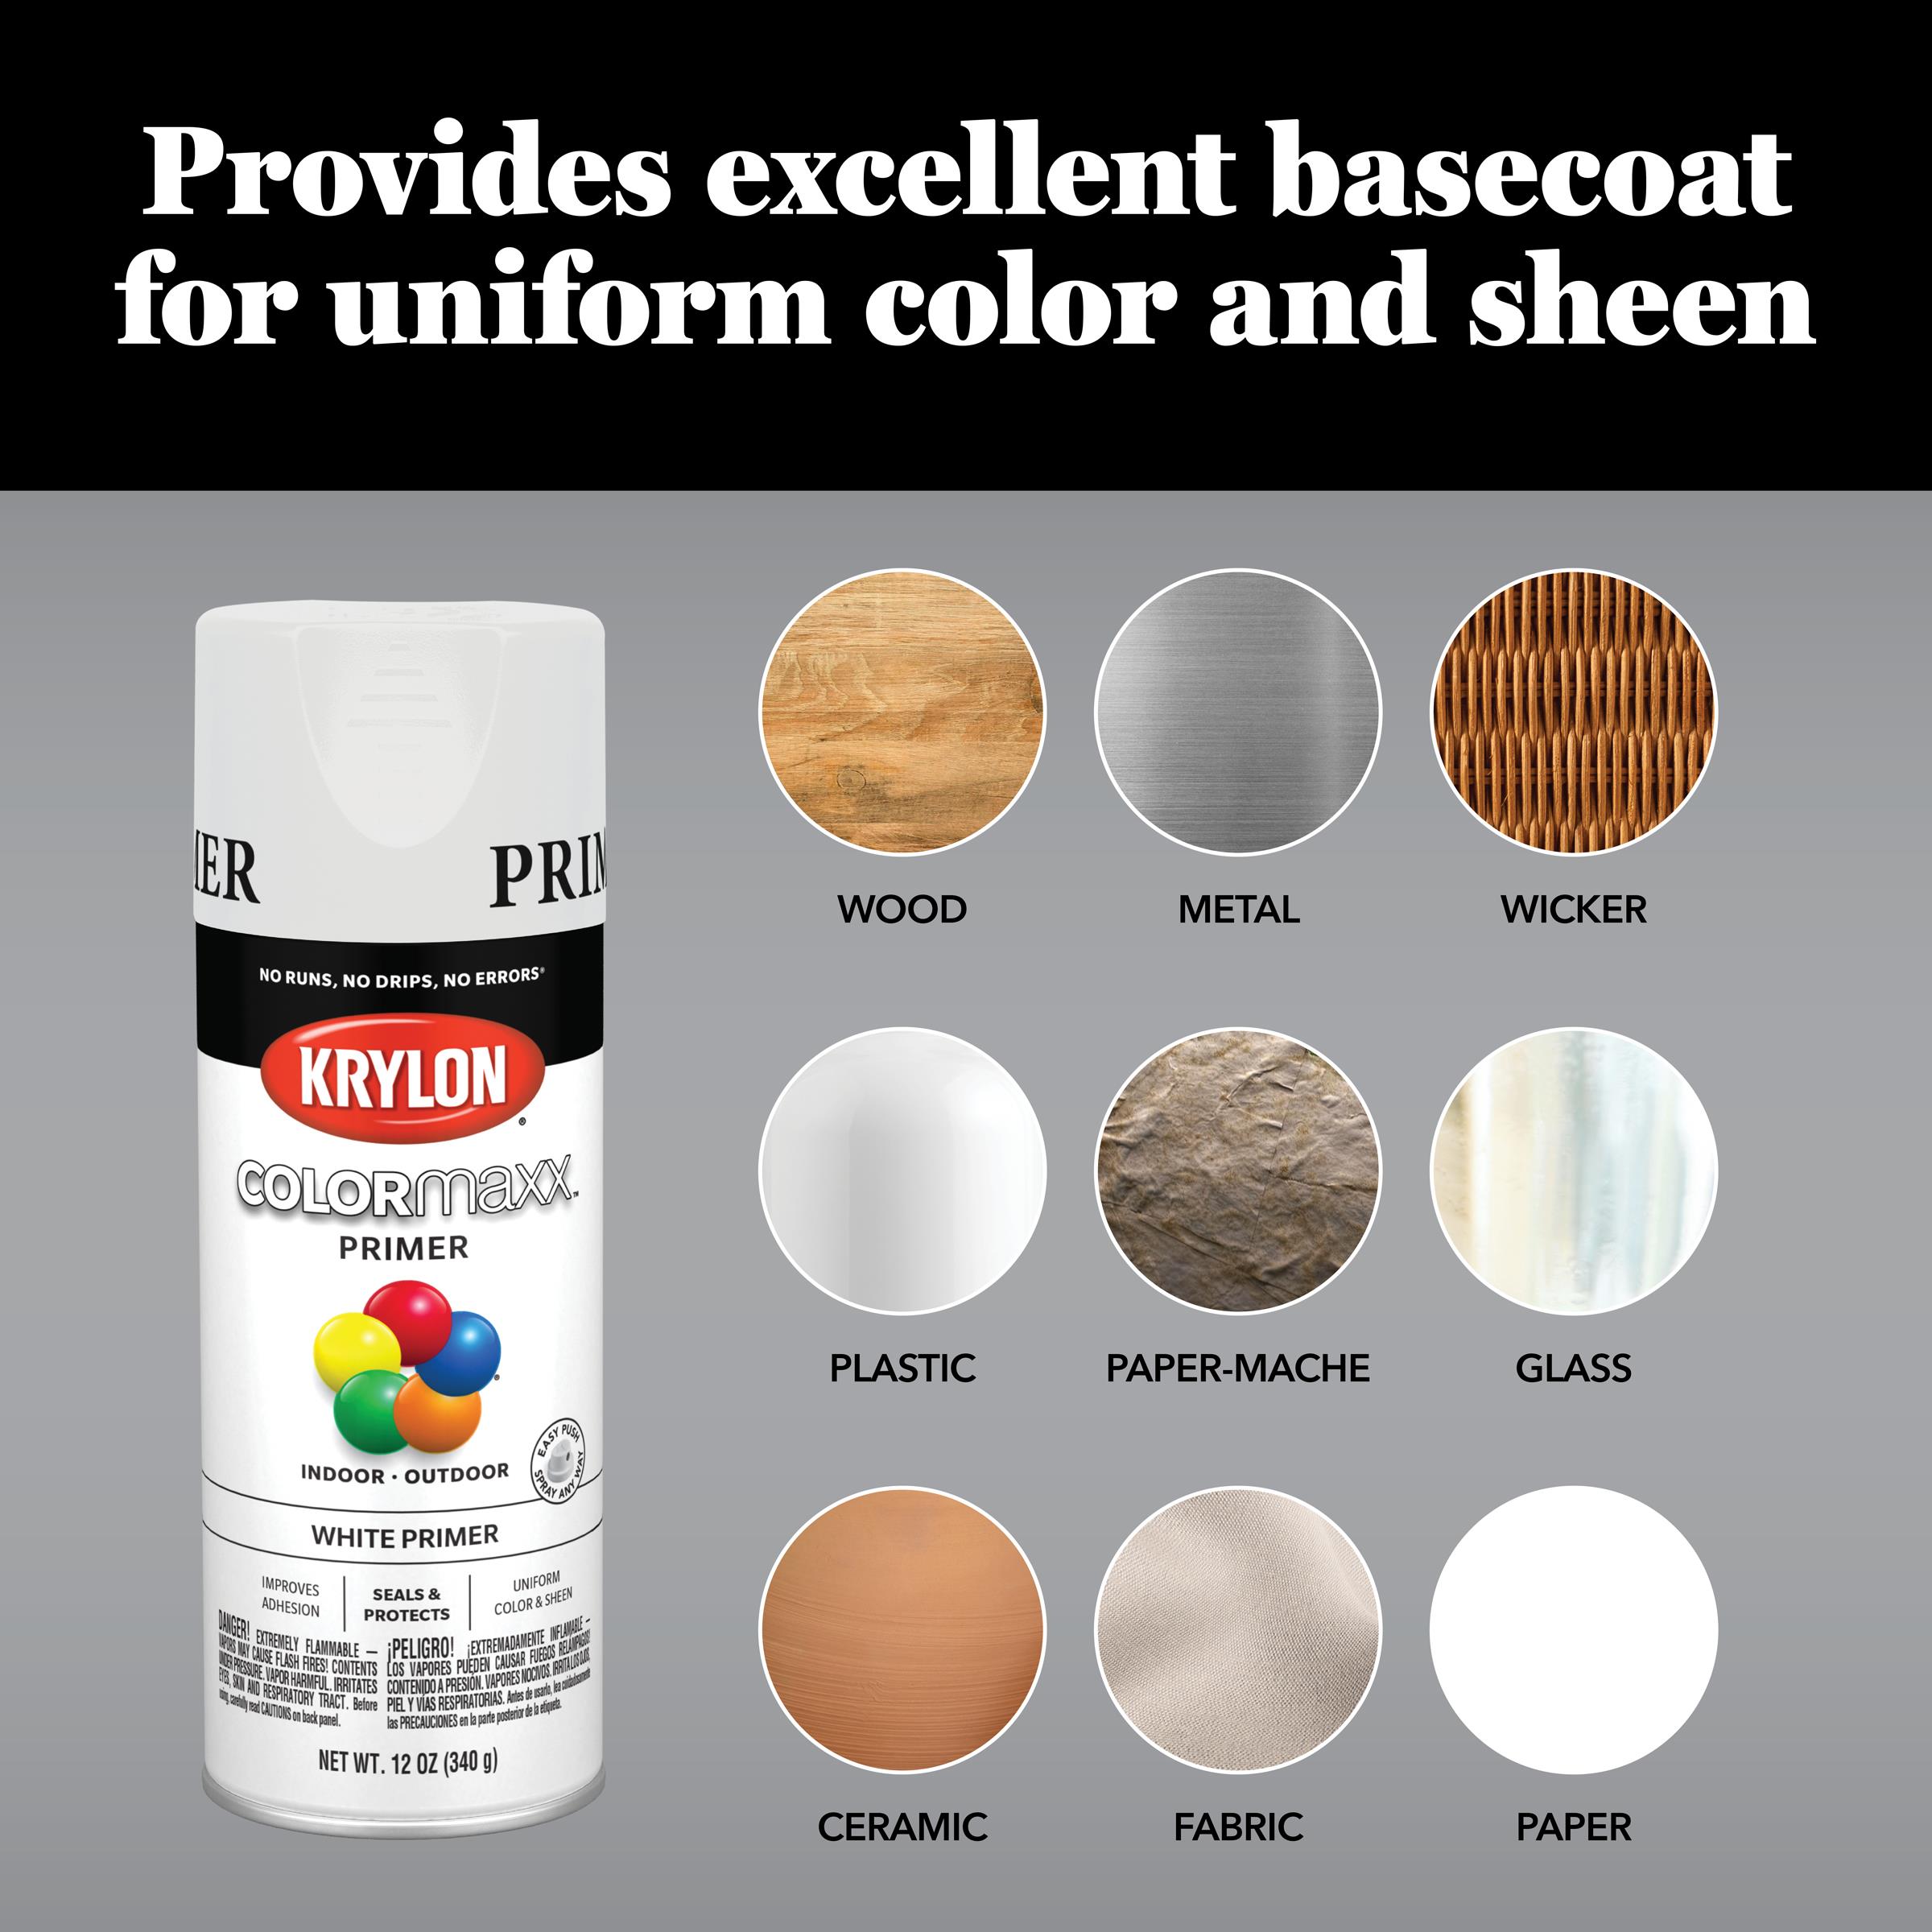 Krylon Rust Tough Red oxide 12 Oz. All-Purpose Spray Paint Primer - Baller  Hardware